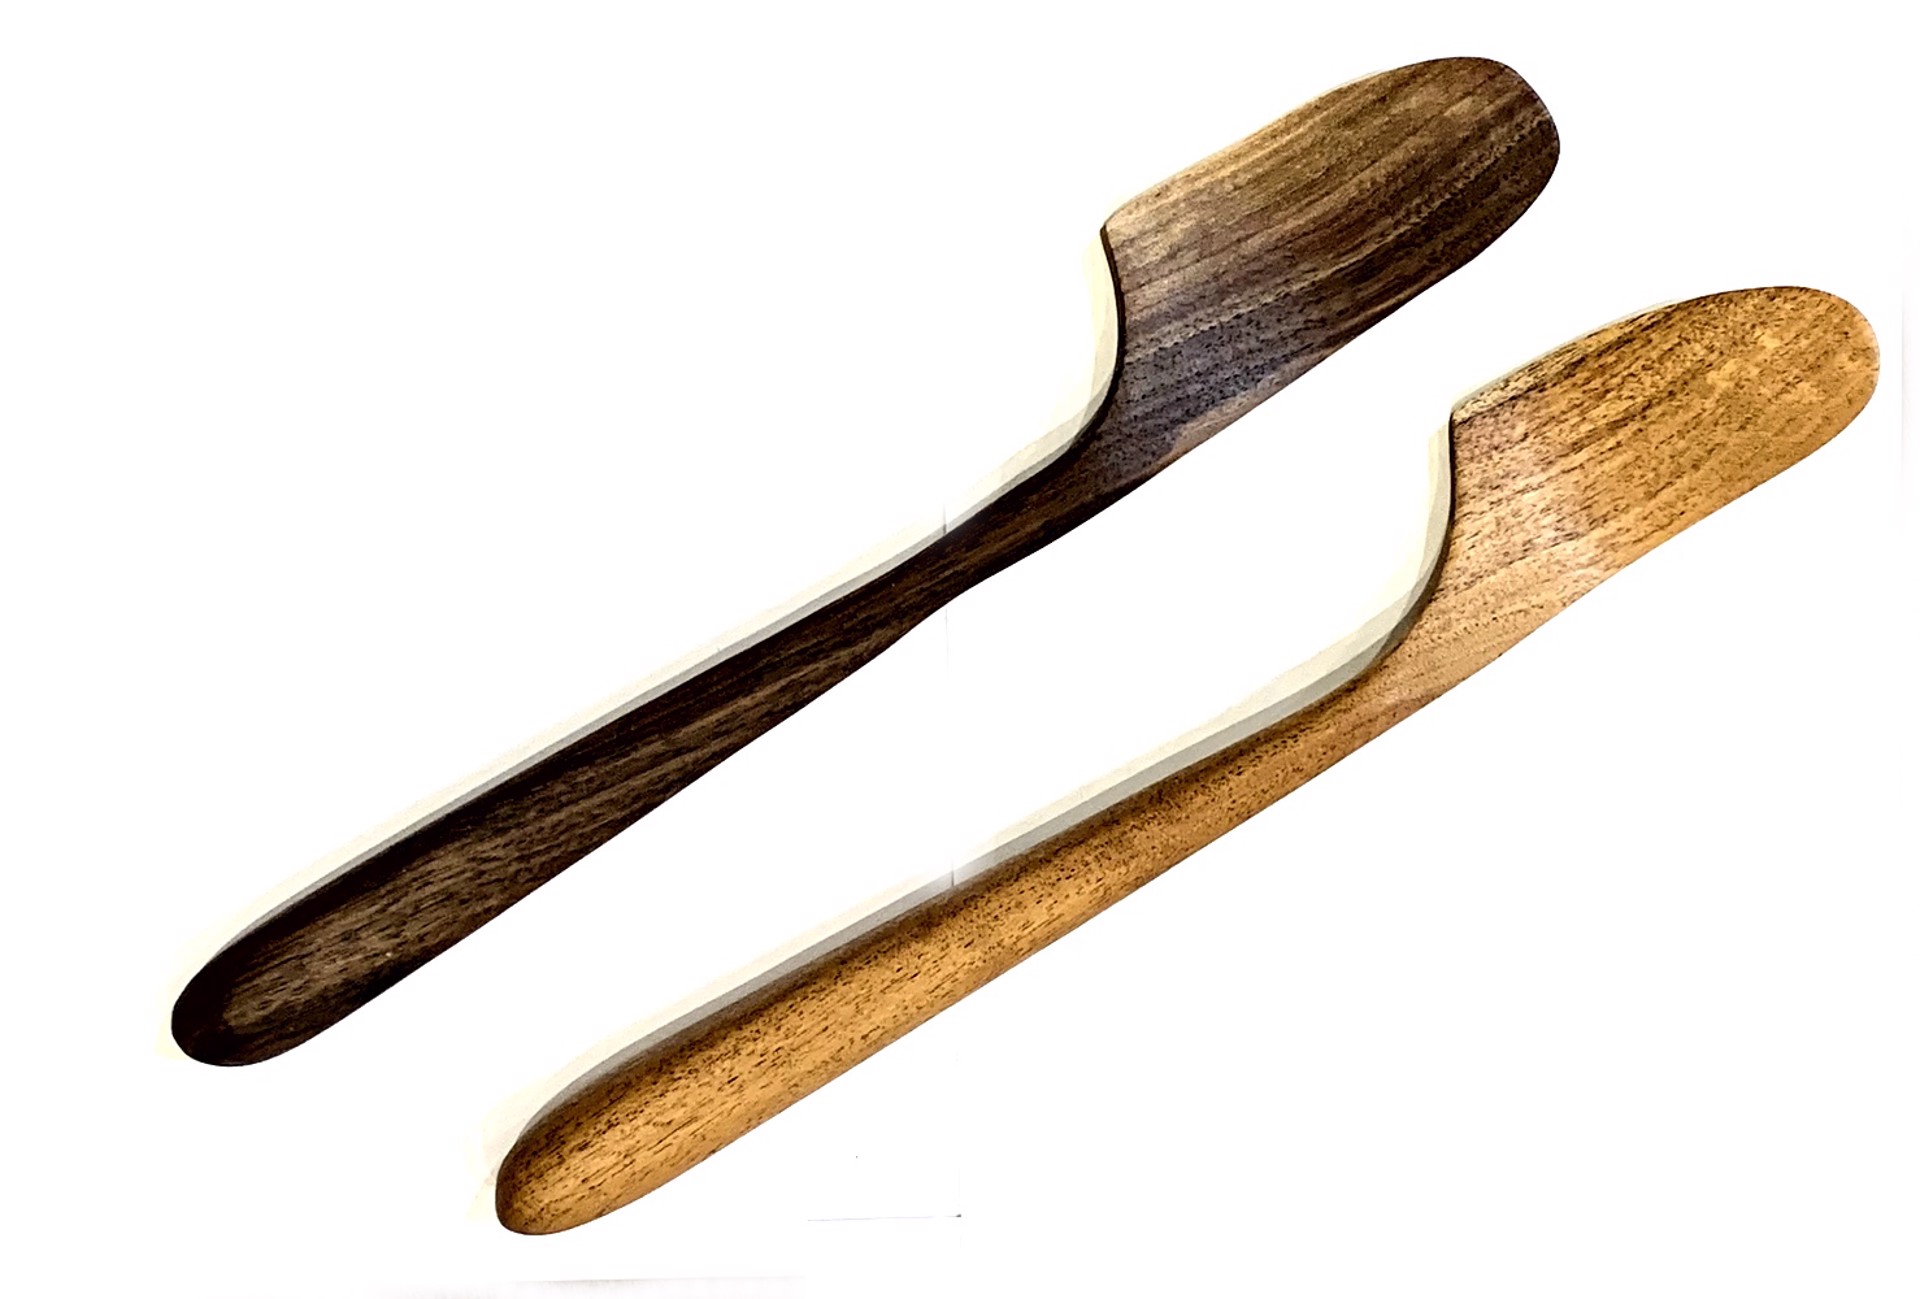 Utensils - Scraper, Right, Mesquite by TreeStump Woodcraft